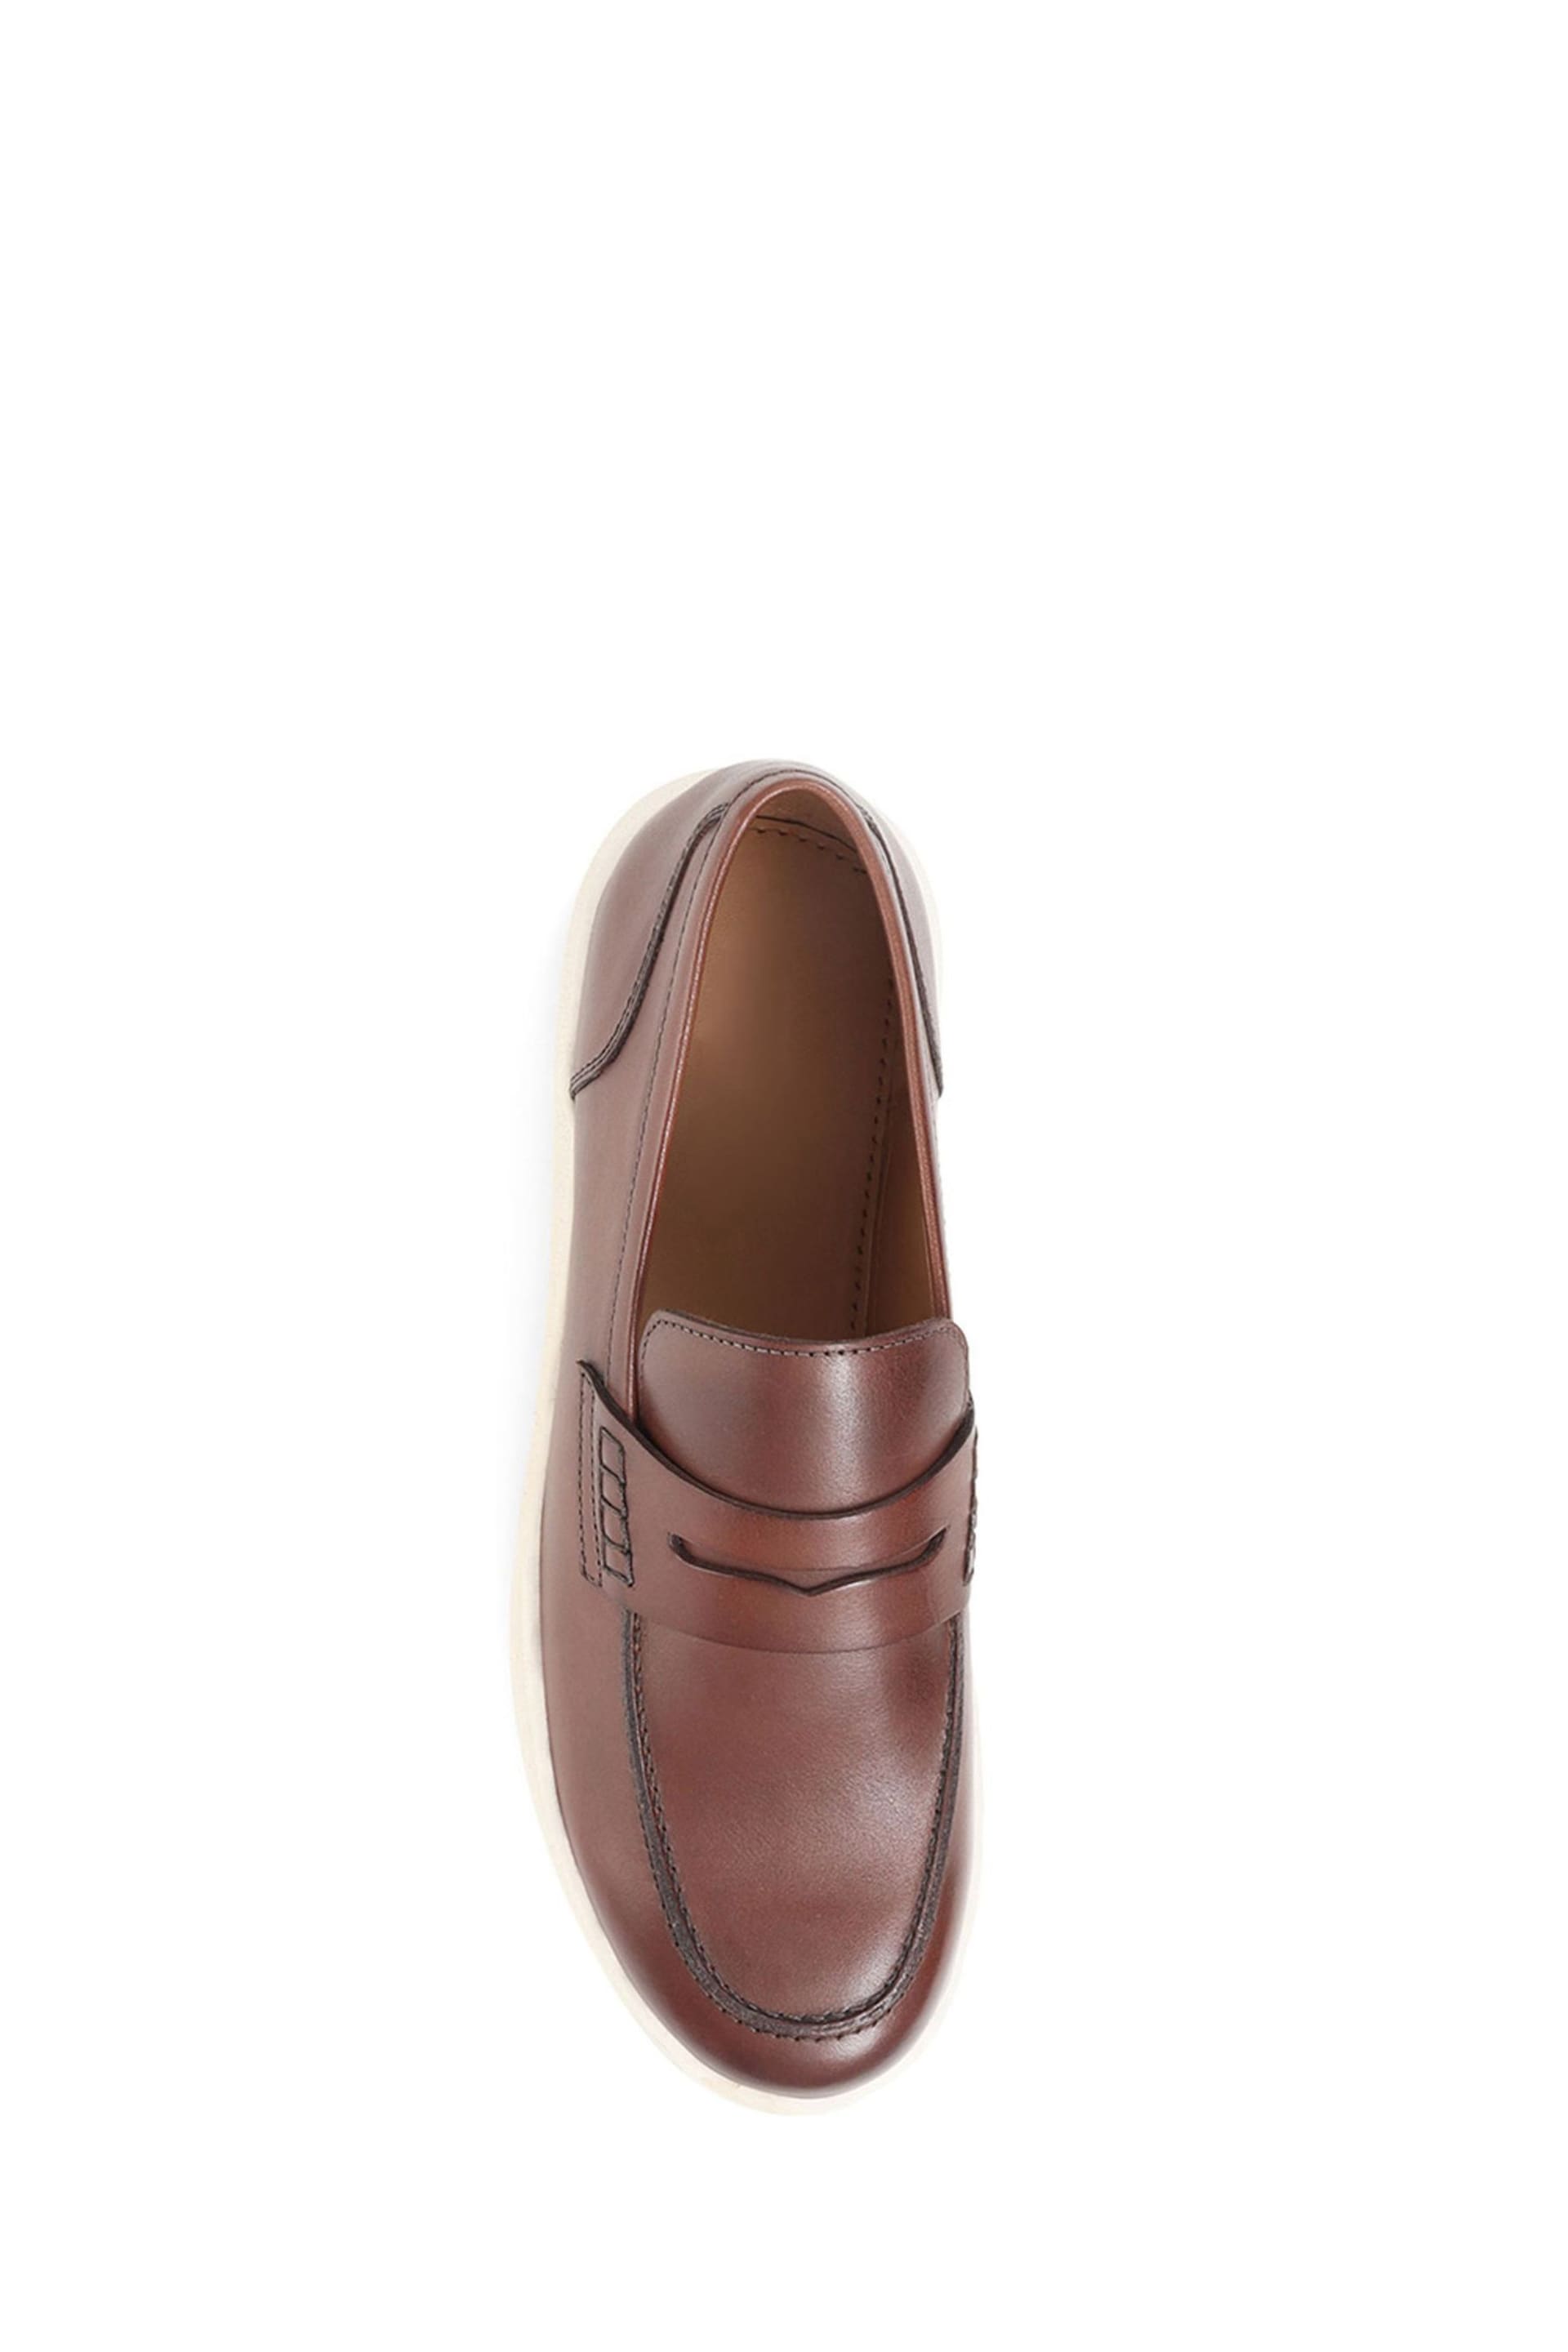 Jones Bootmaker Sal Leather Slip-on Brown Loafers - Image 4 of 5